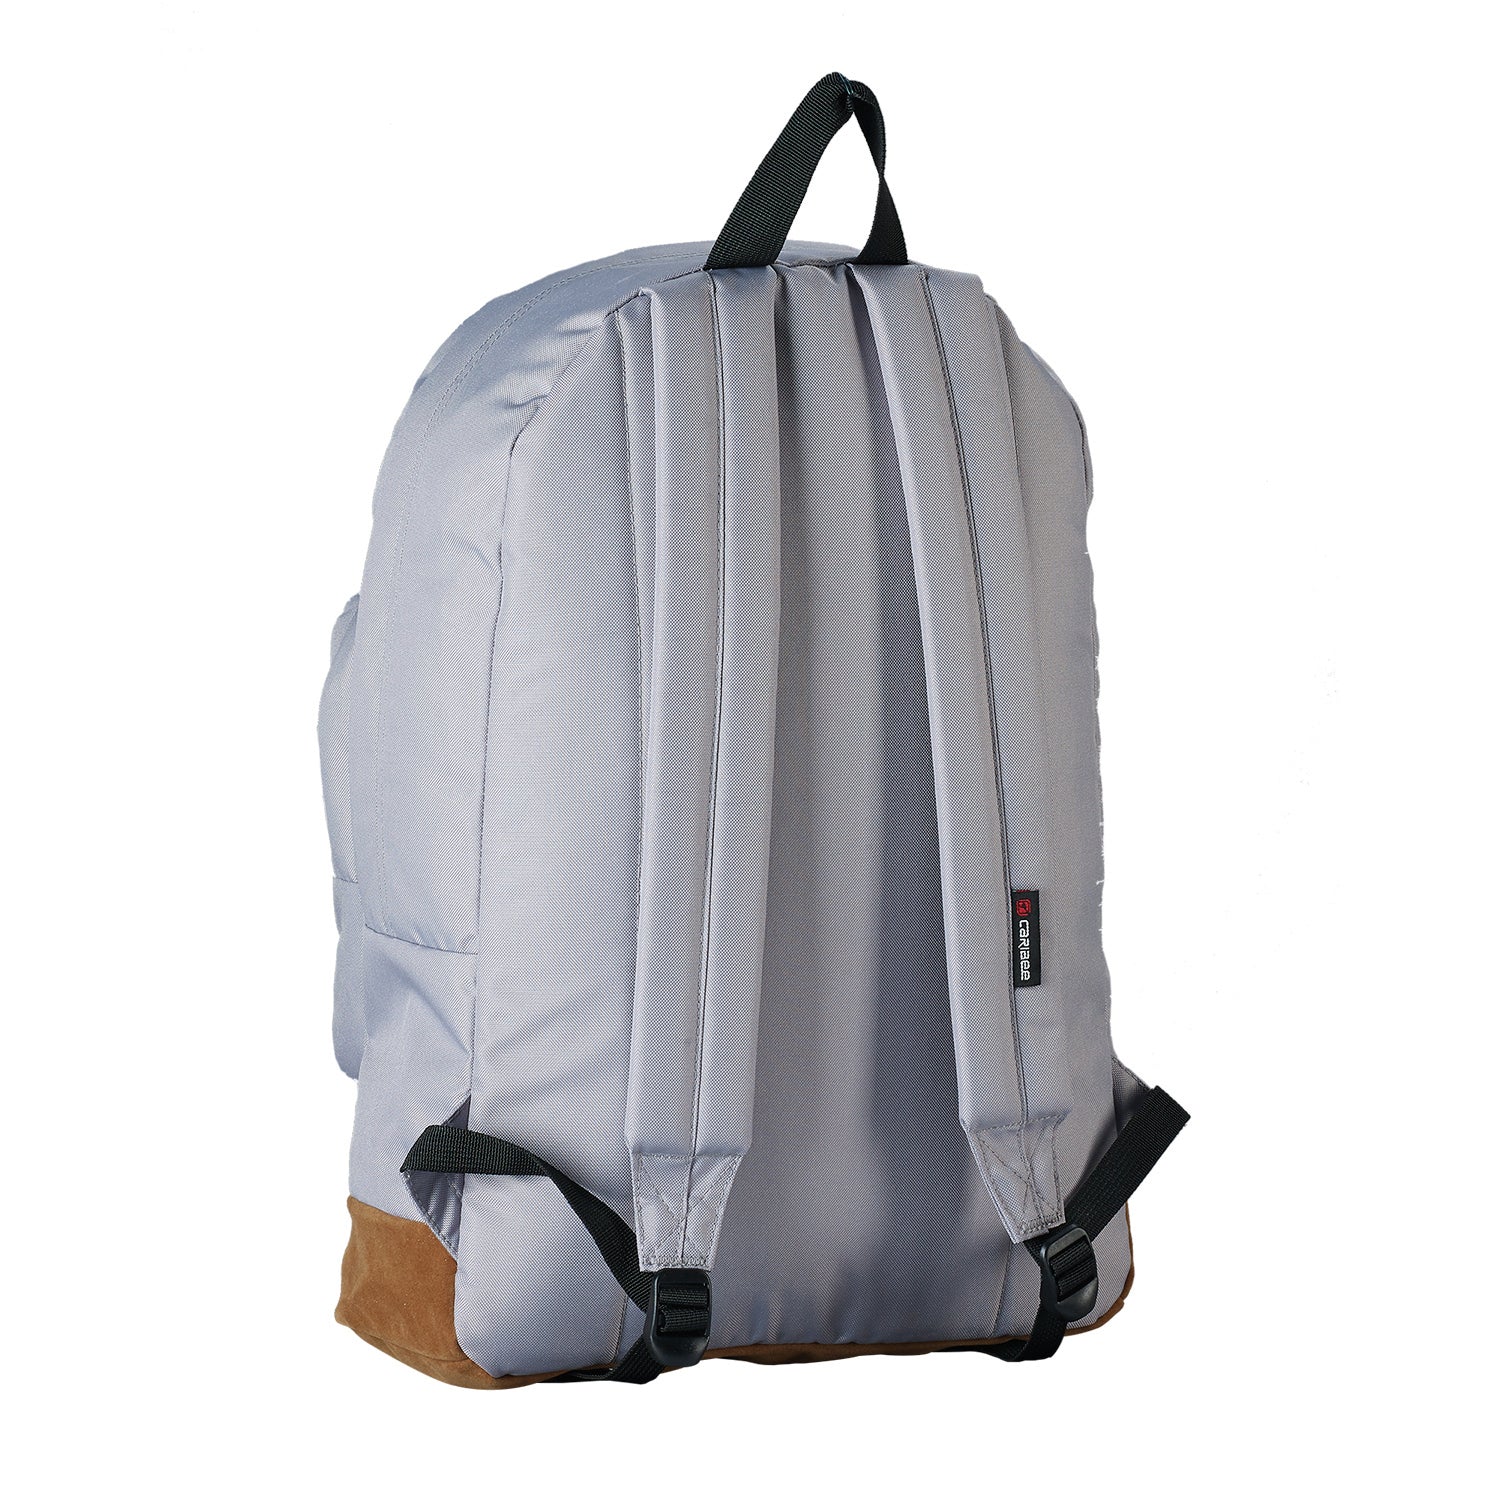 Caribee Retro backpack grey harness